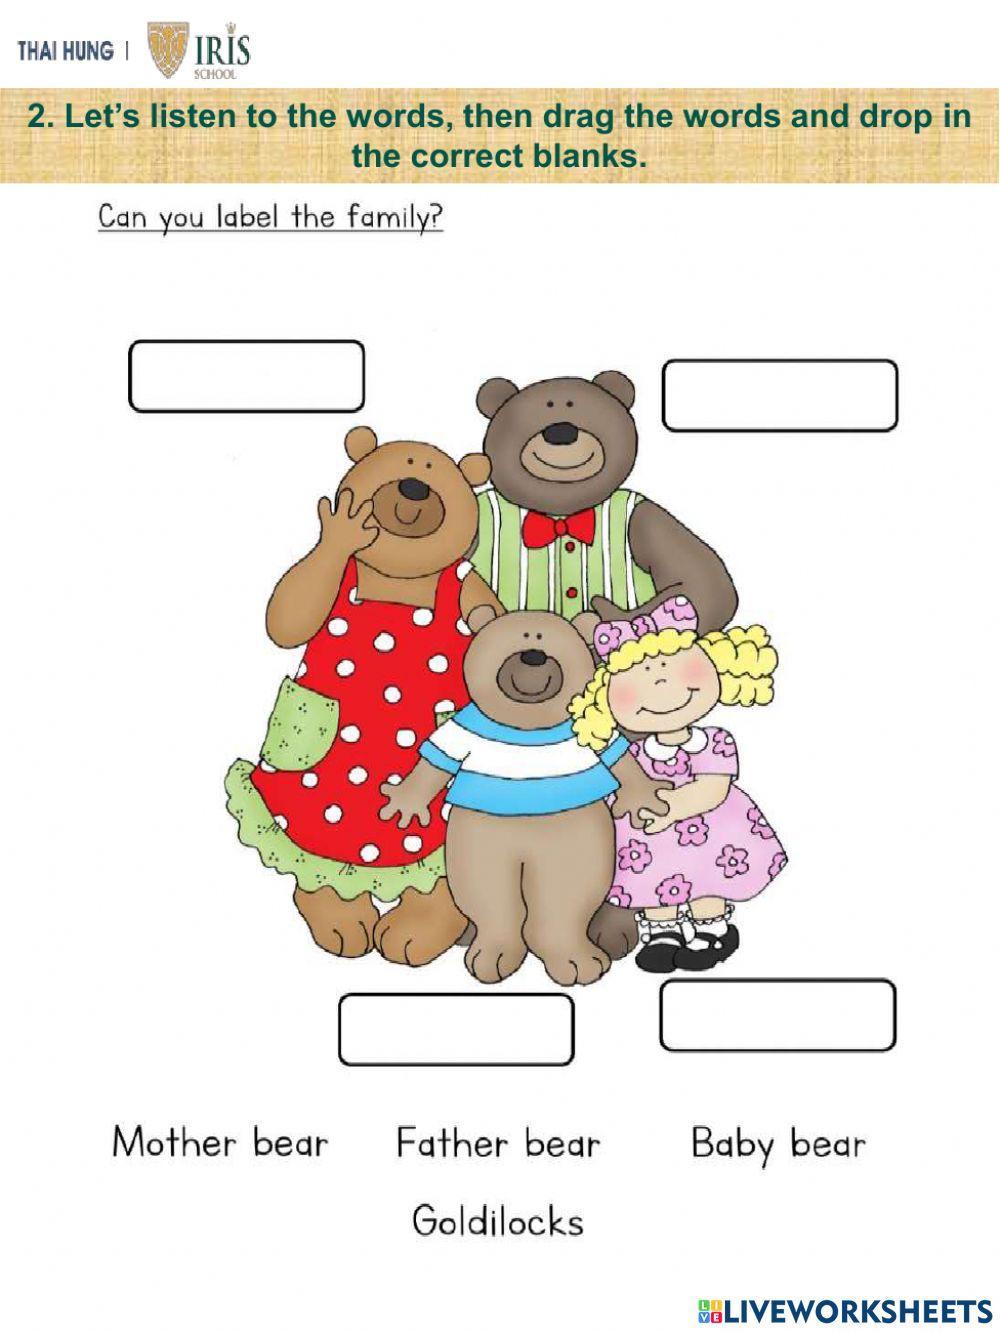 Rainbow-Worksheet about Goldilocks and the Three Bears 4